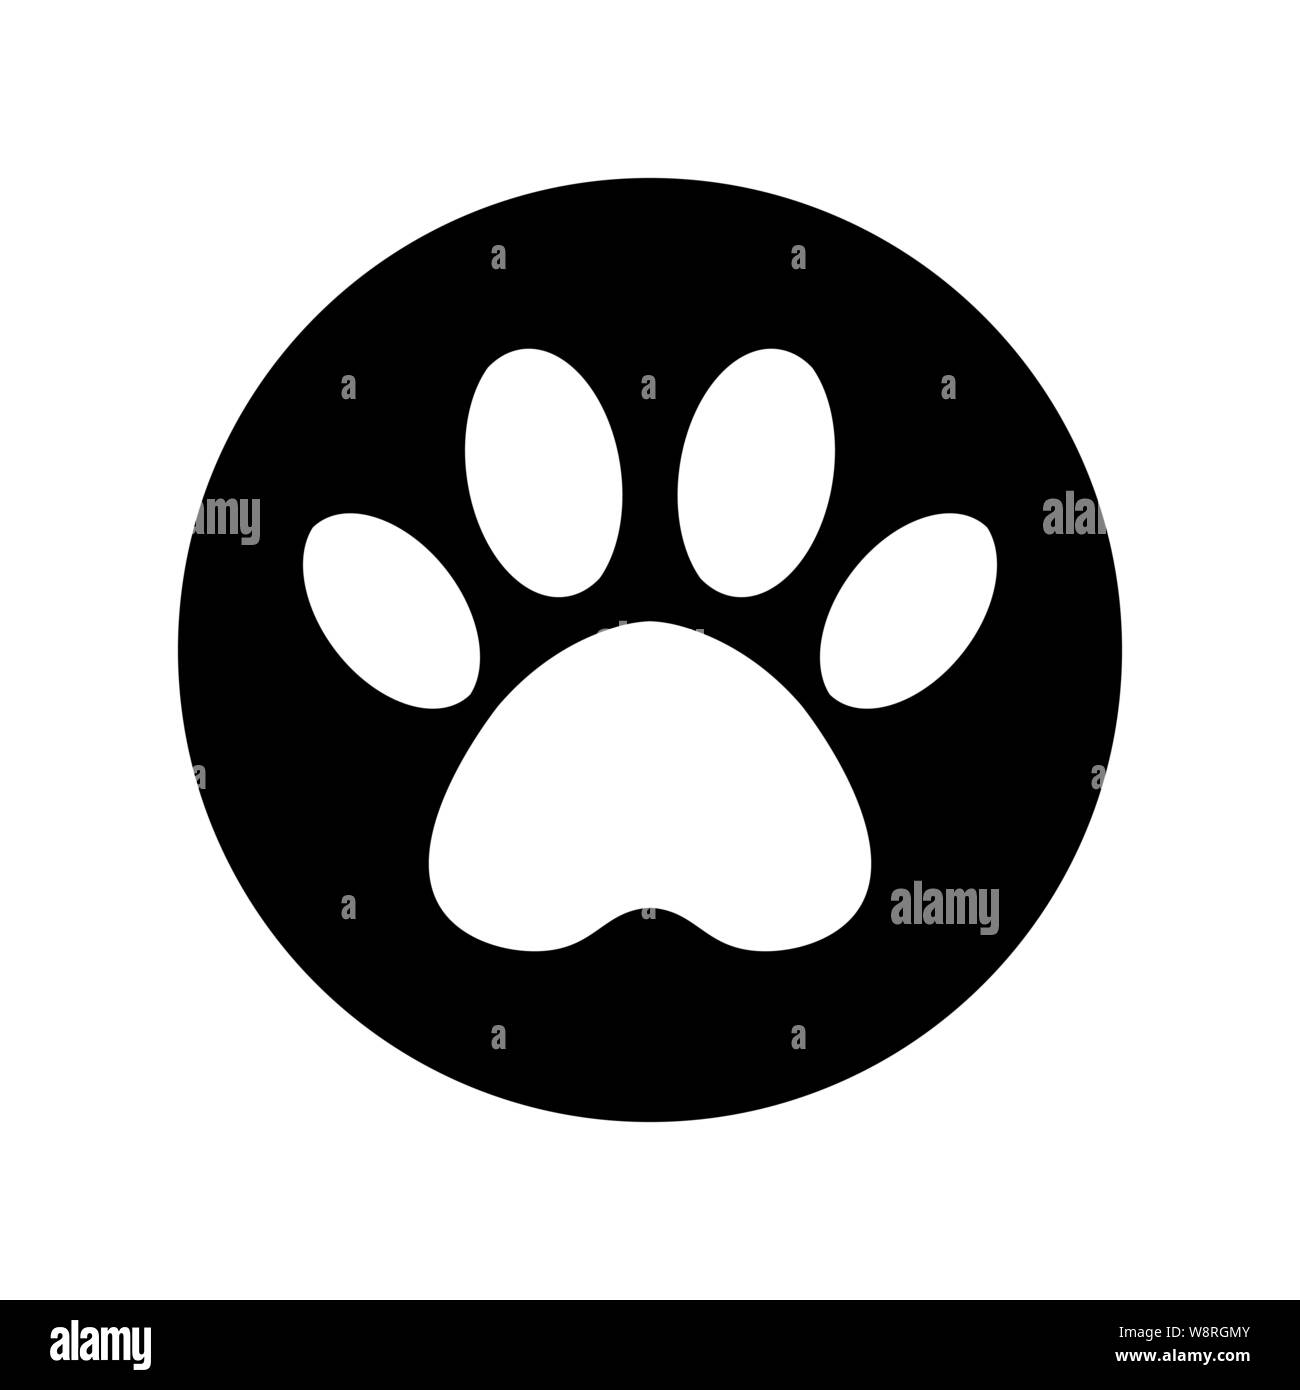 Silueta de pata de animal huellas de pata icono de cachorro de perro o gato  huella de mascota